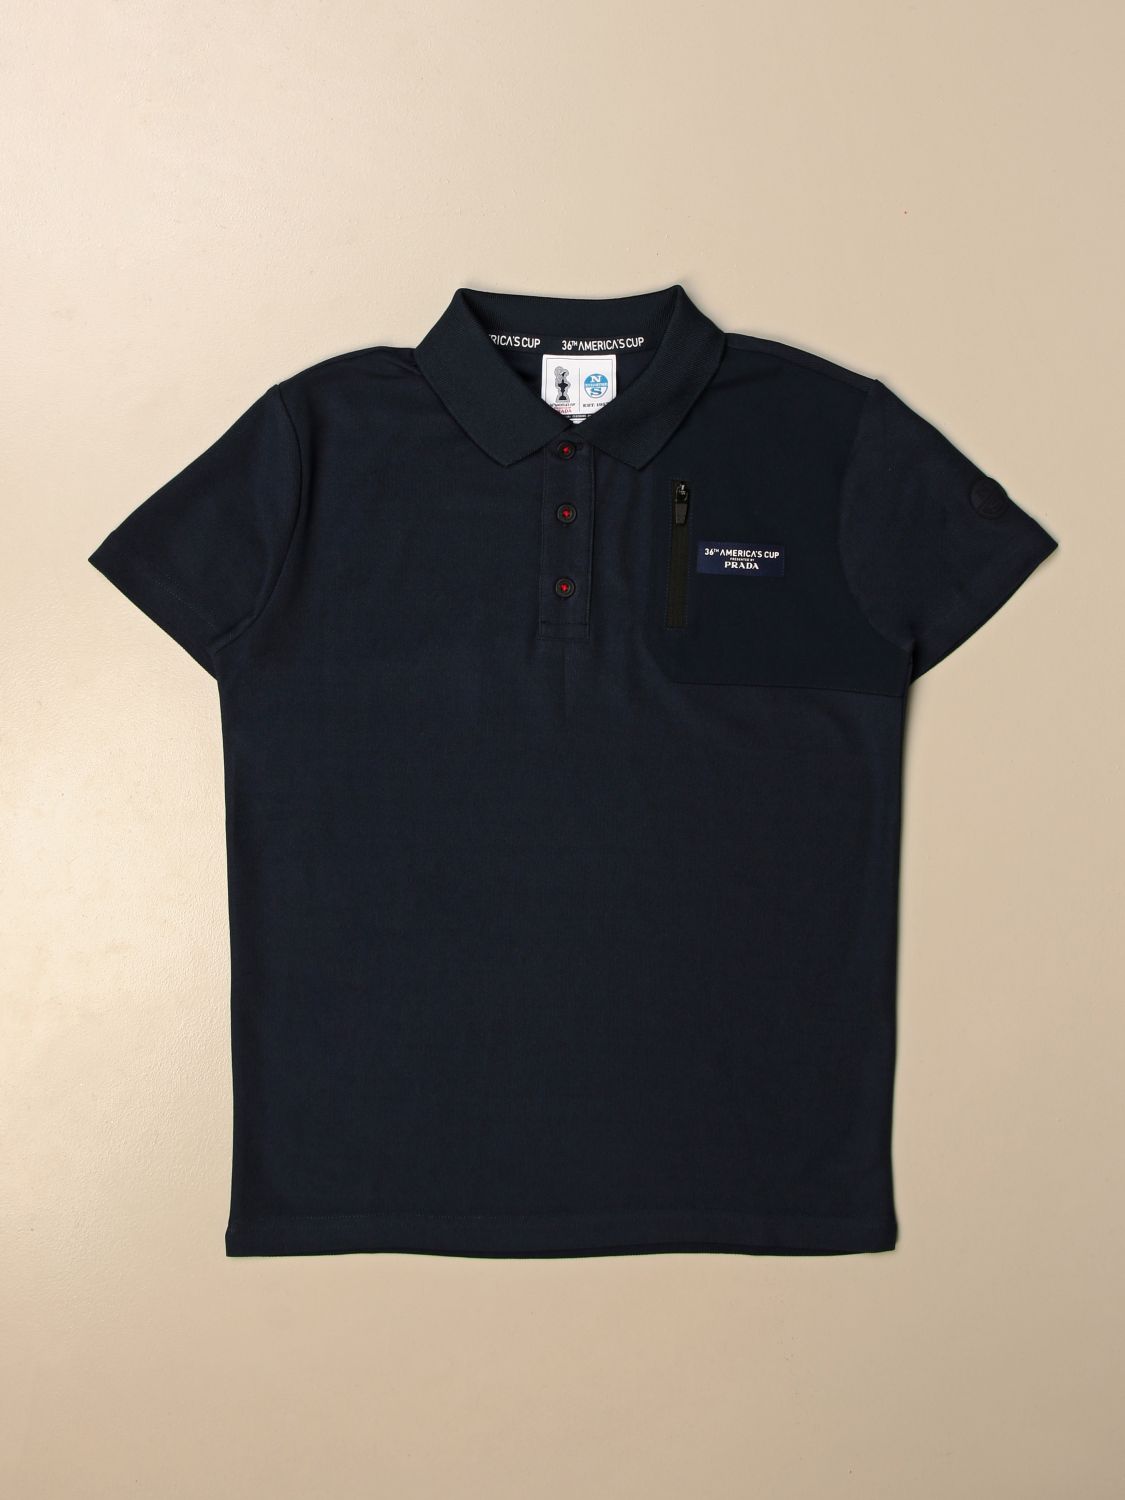 North Sails Prada Outlet: polo shirt for boys - Navy | North Sails Prada  polo shirt 453008 online on 